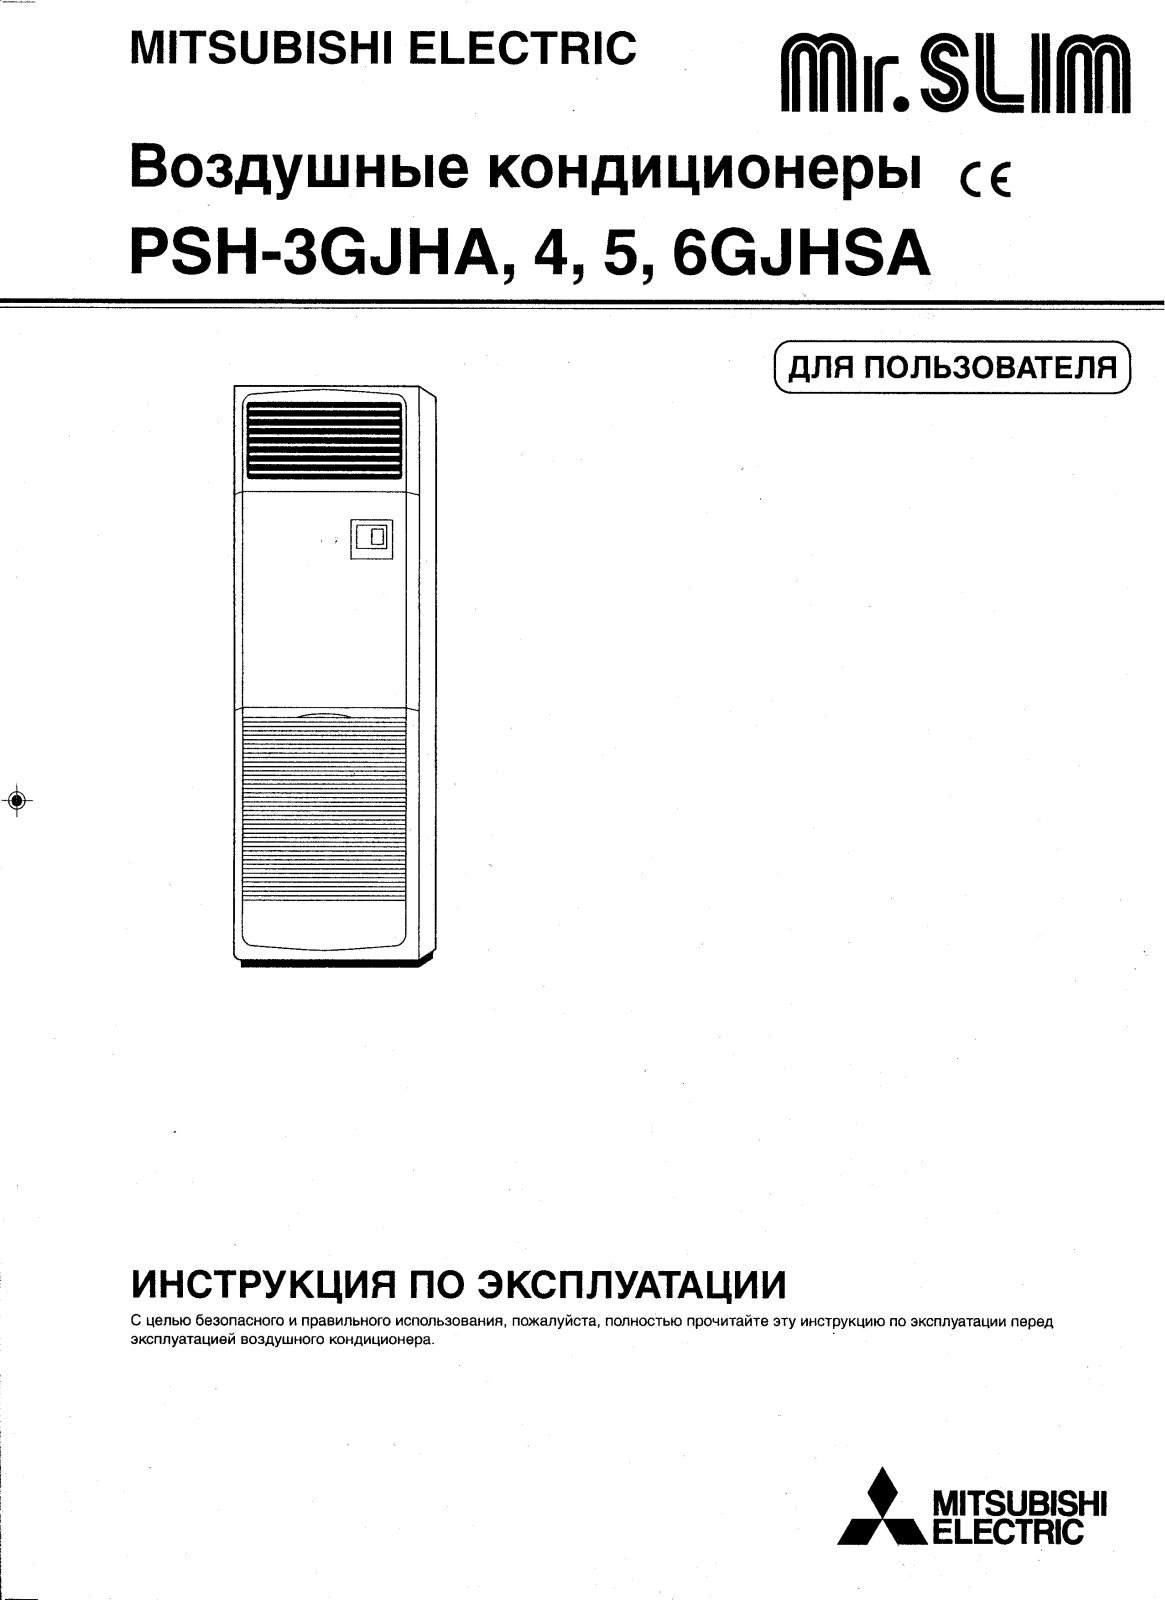 Mitsubishi electric PSH-4GJHSA1, PSH-3GJHA1, PSH-4GAKH, PSH-5GJHSA, PSH-3GJHA User Manual